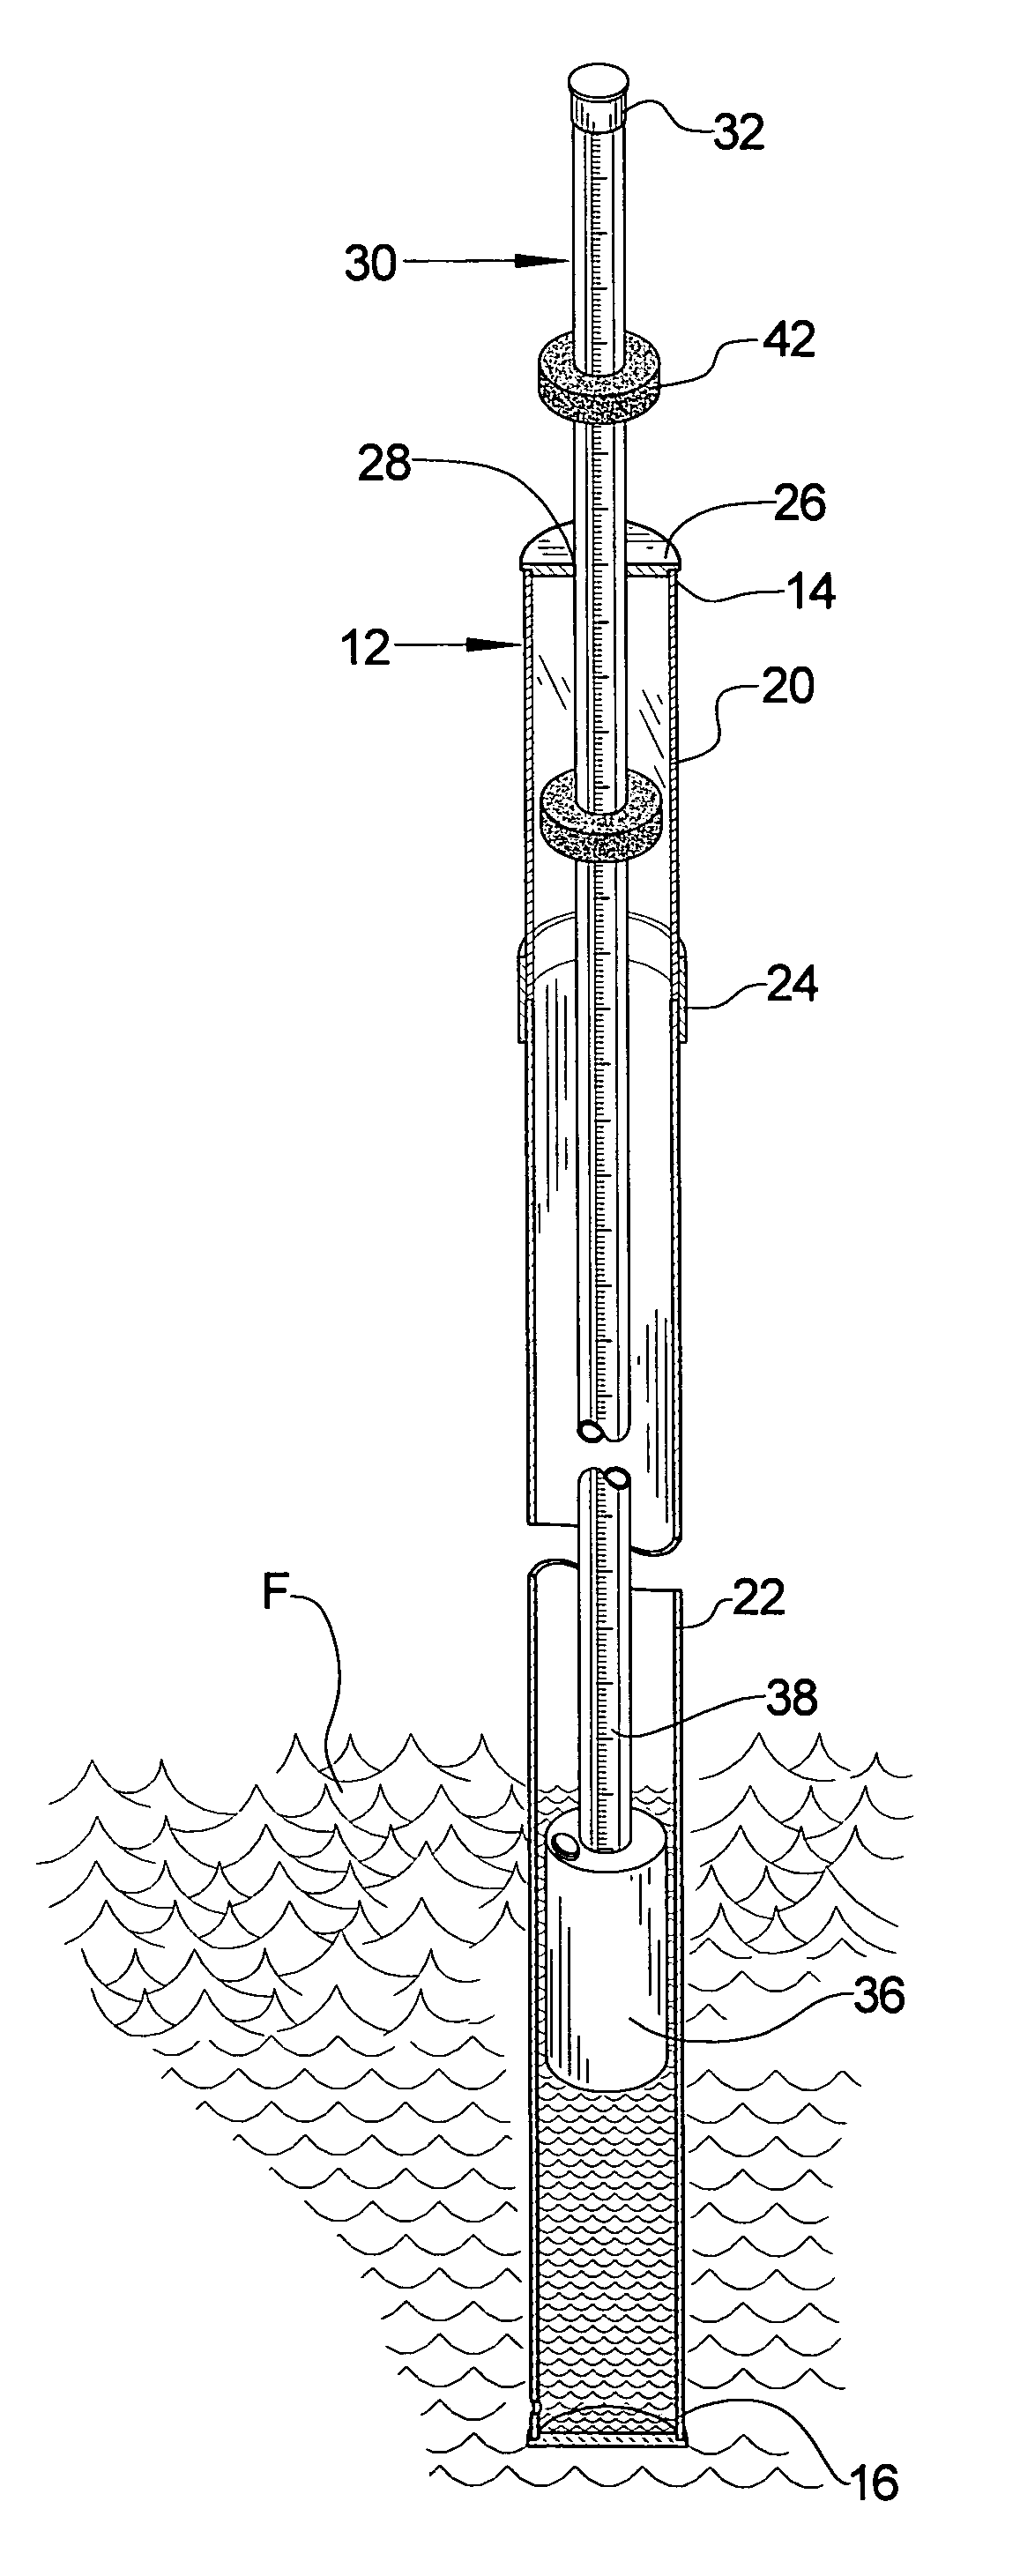 Fluid level measurement device